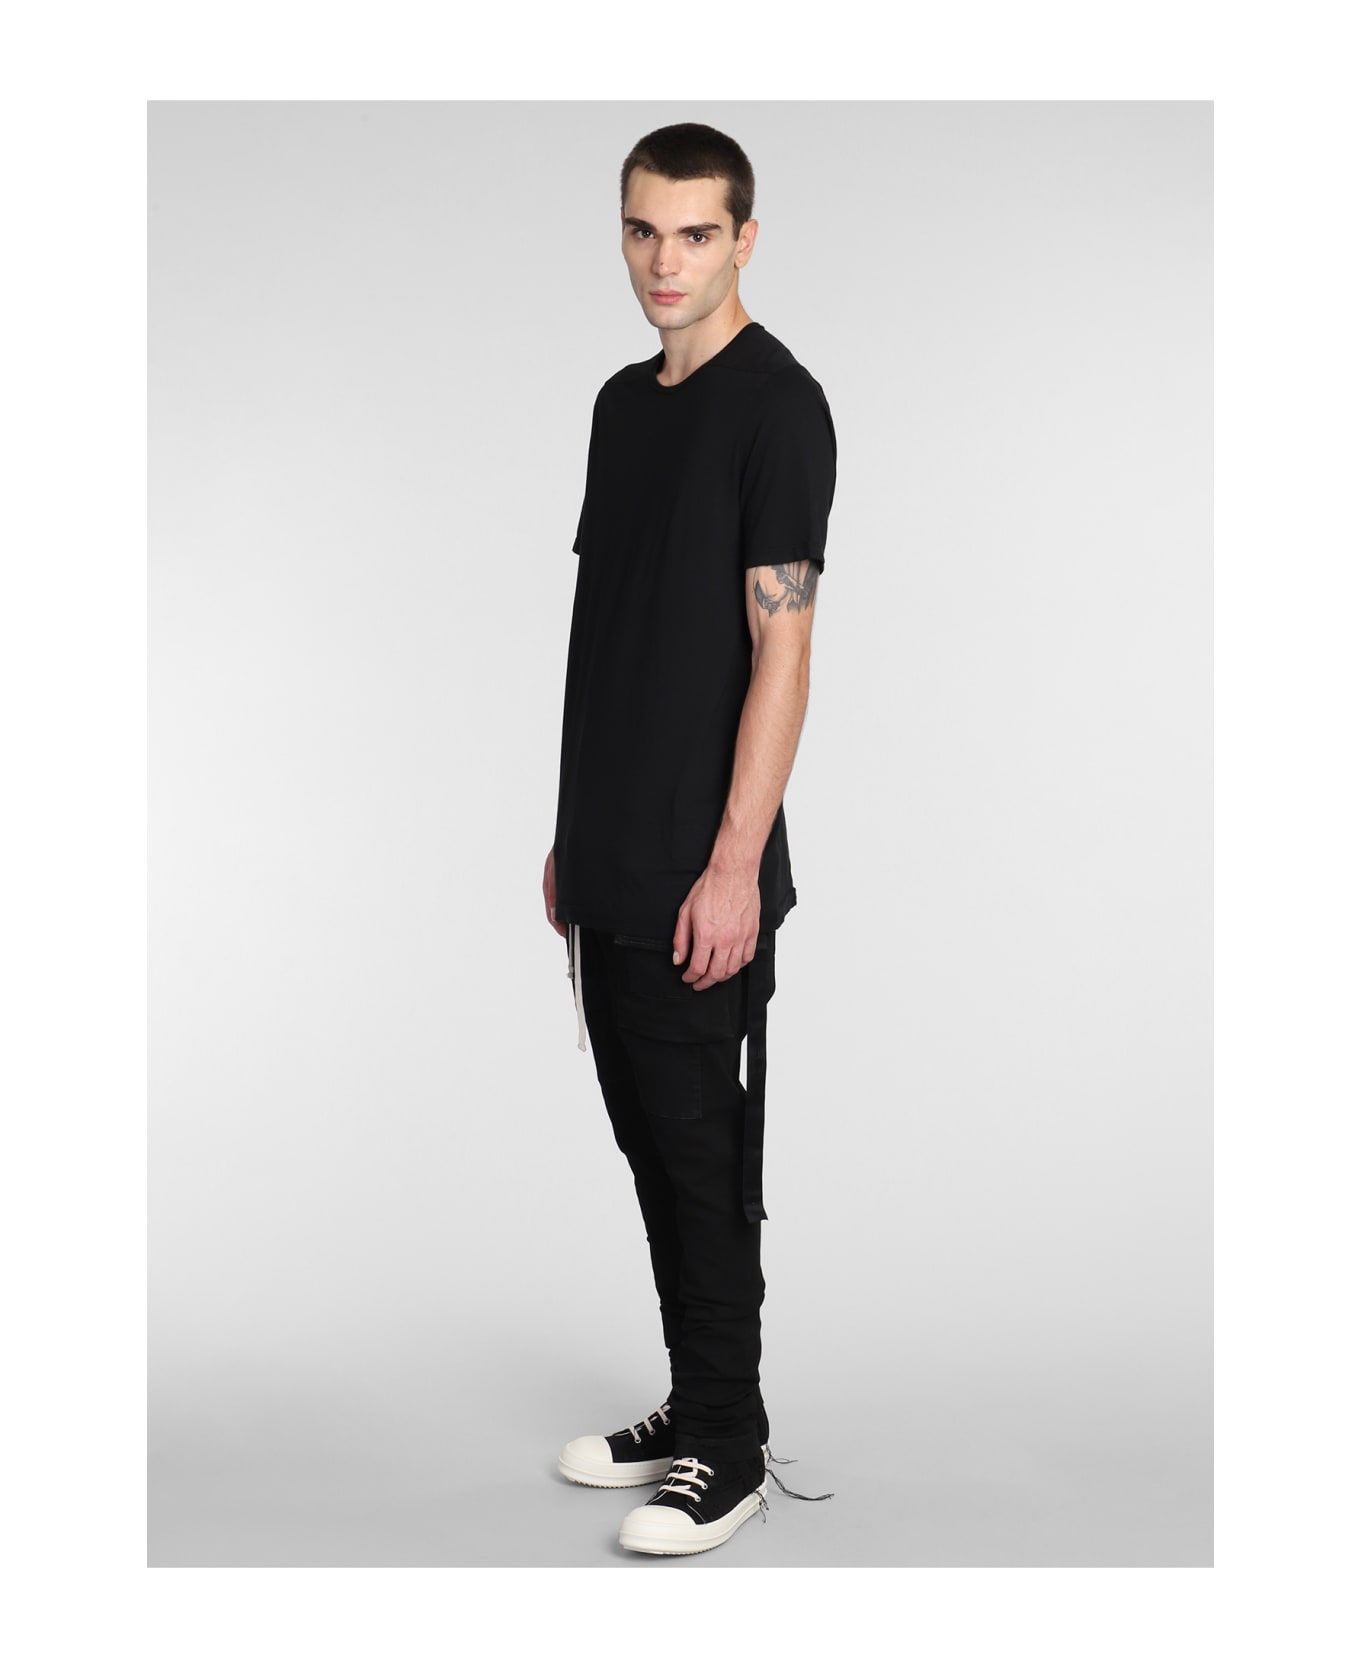 DRKSHDW Level T T-shirt In Black Cotton - Black